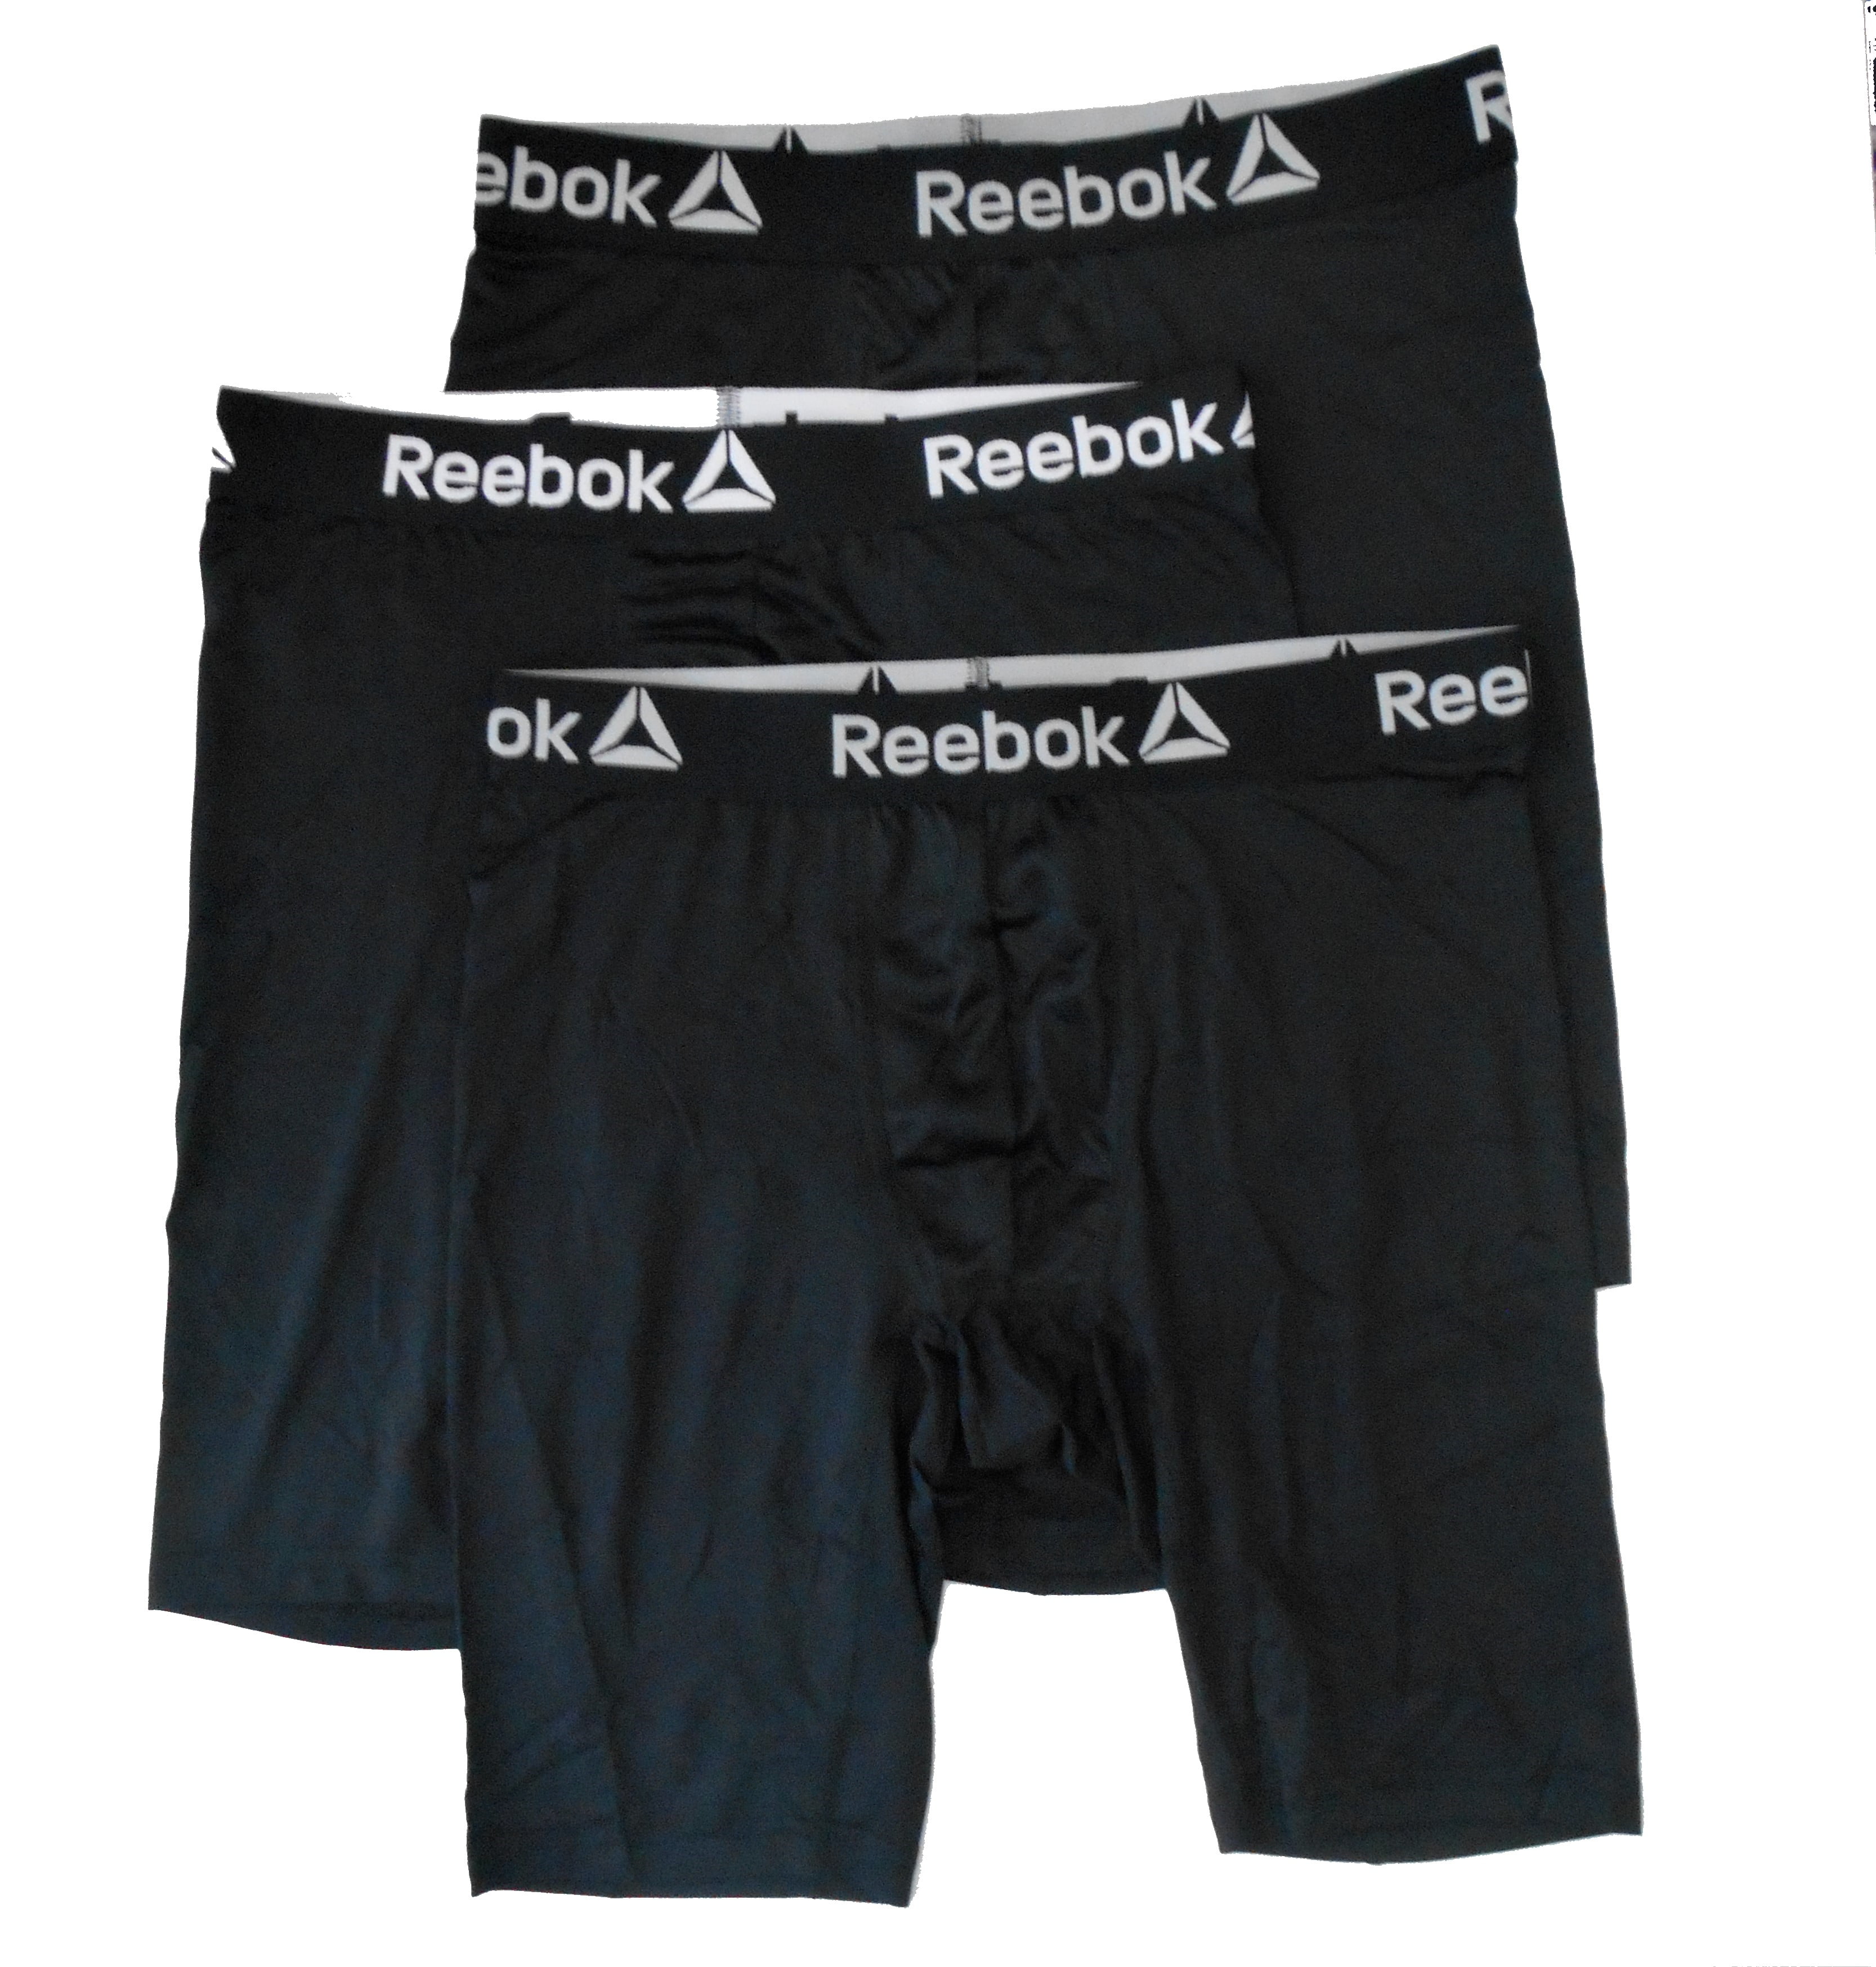 Reebok - REEBOK MEN UNDERWEAR 3 PACK BOXER BRIEF - 191 - P04 LONG LEG ...